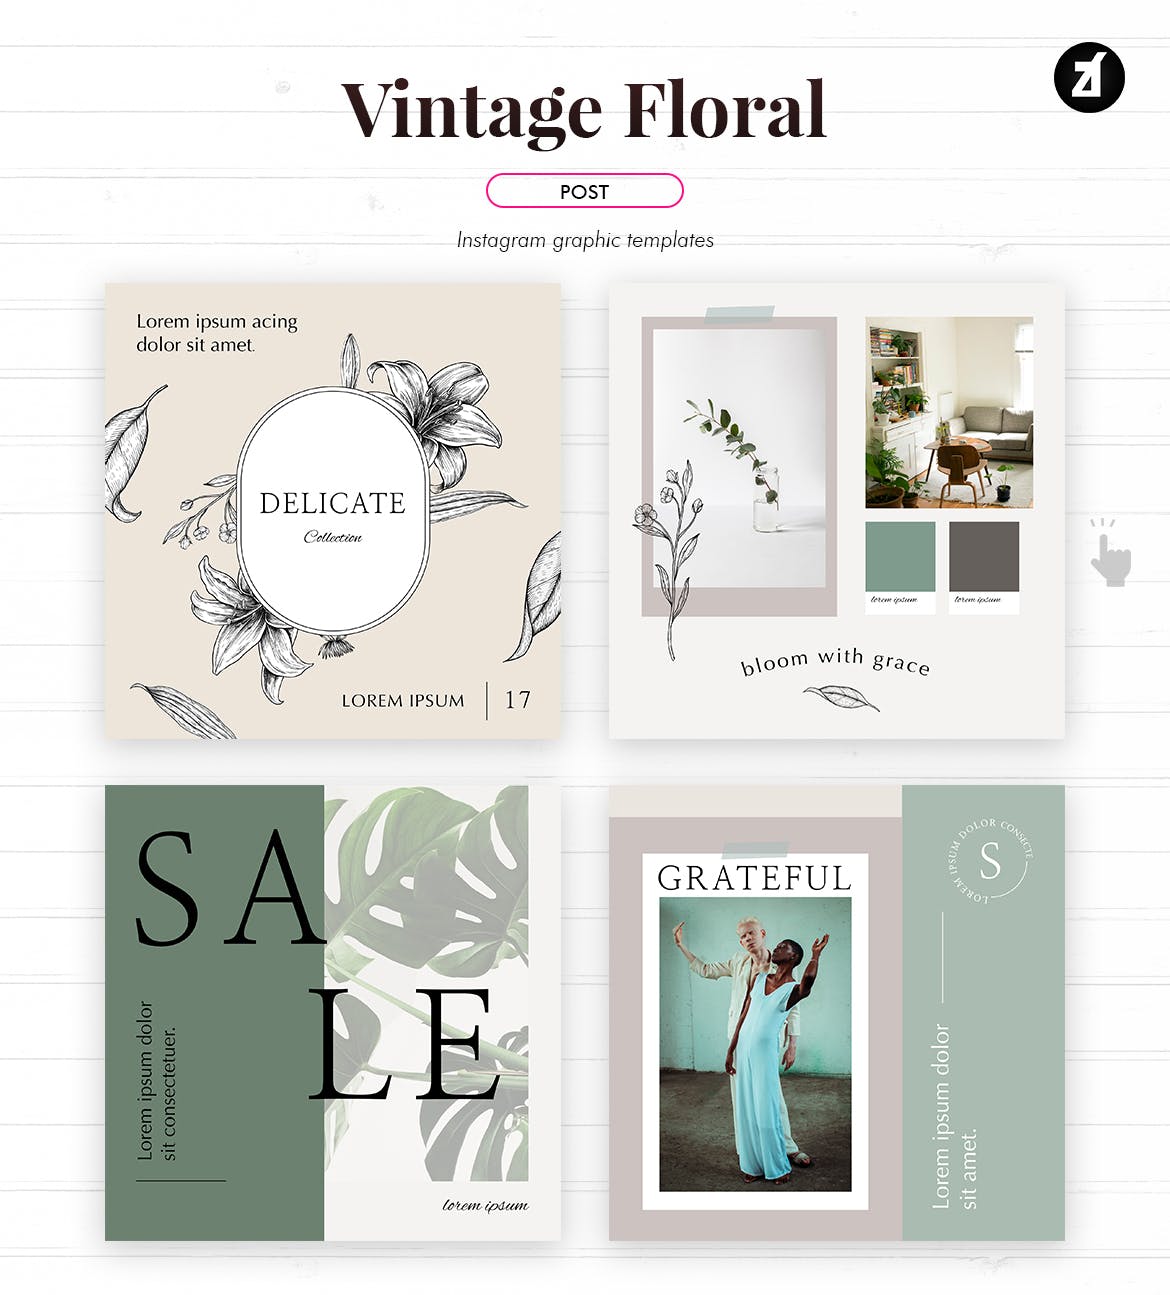 复古花卉社交媒体图形模板定制素材包 Vintage floral social media graphic templates设计素材模板